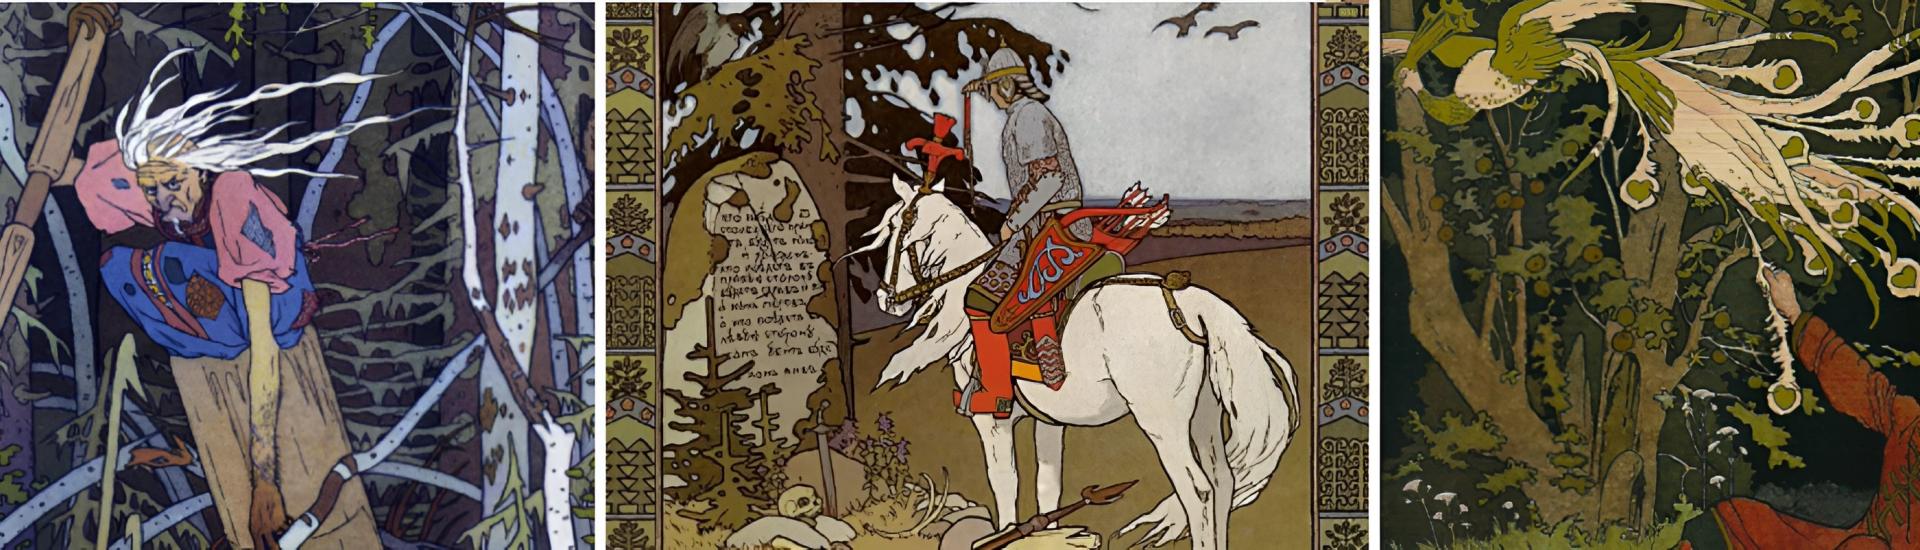 Slide image displaying illustrations from Slavic literature